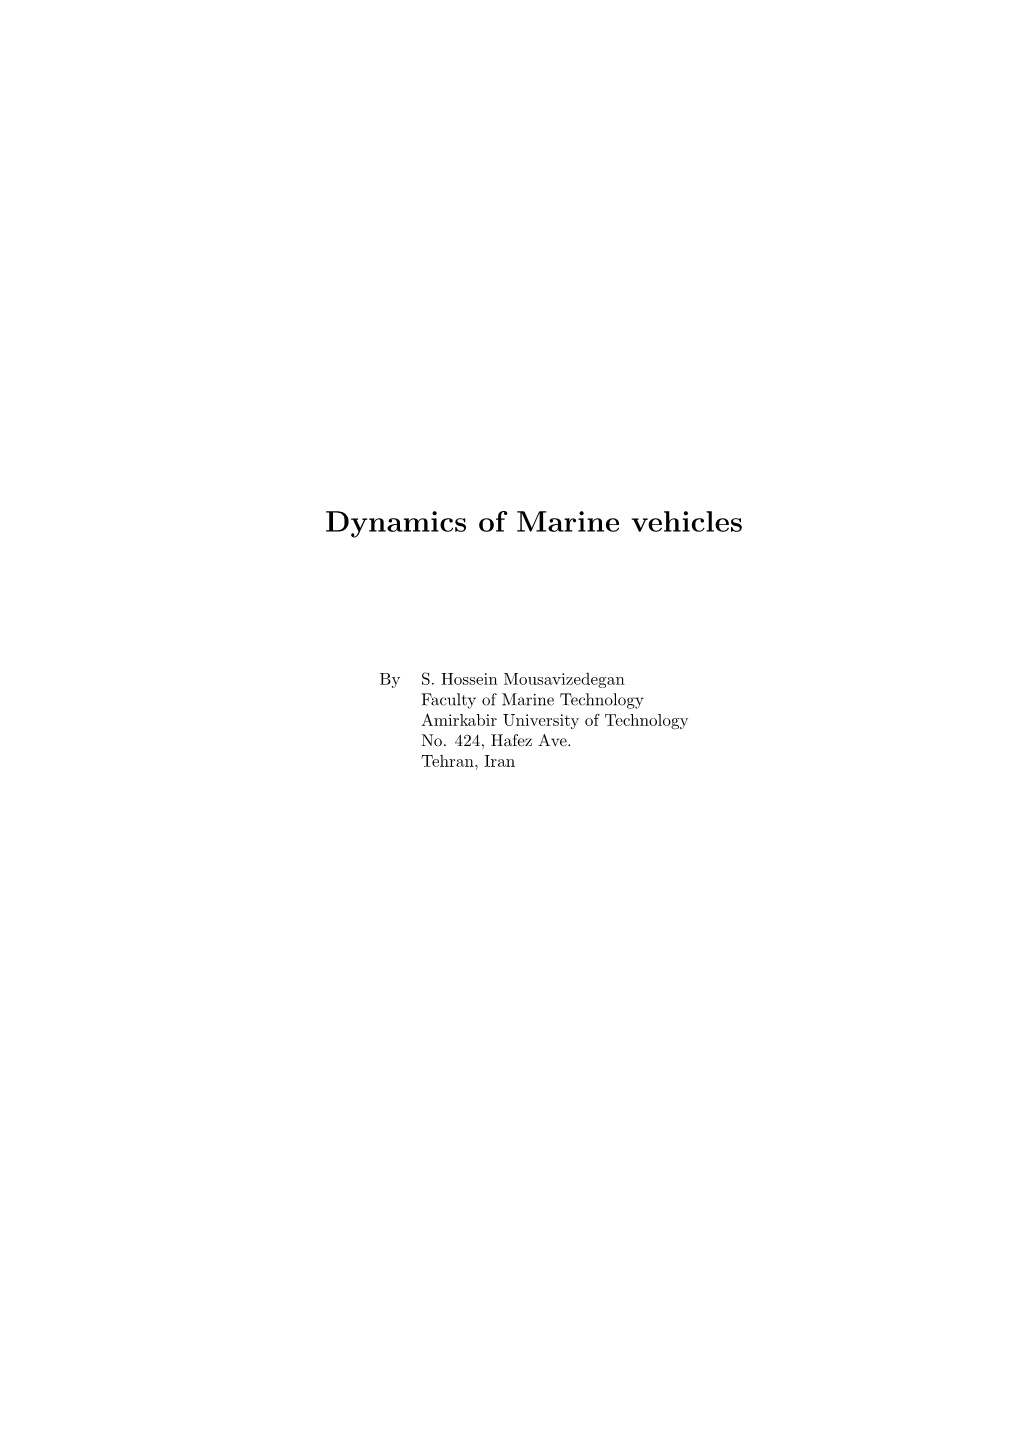 Dynamics of Marine Vehicles